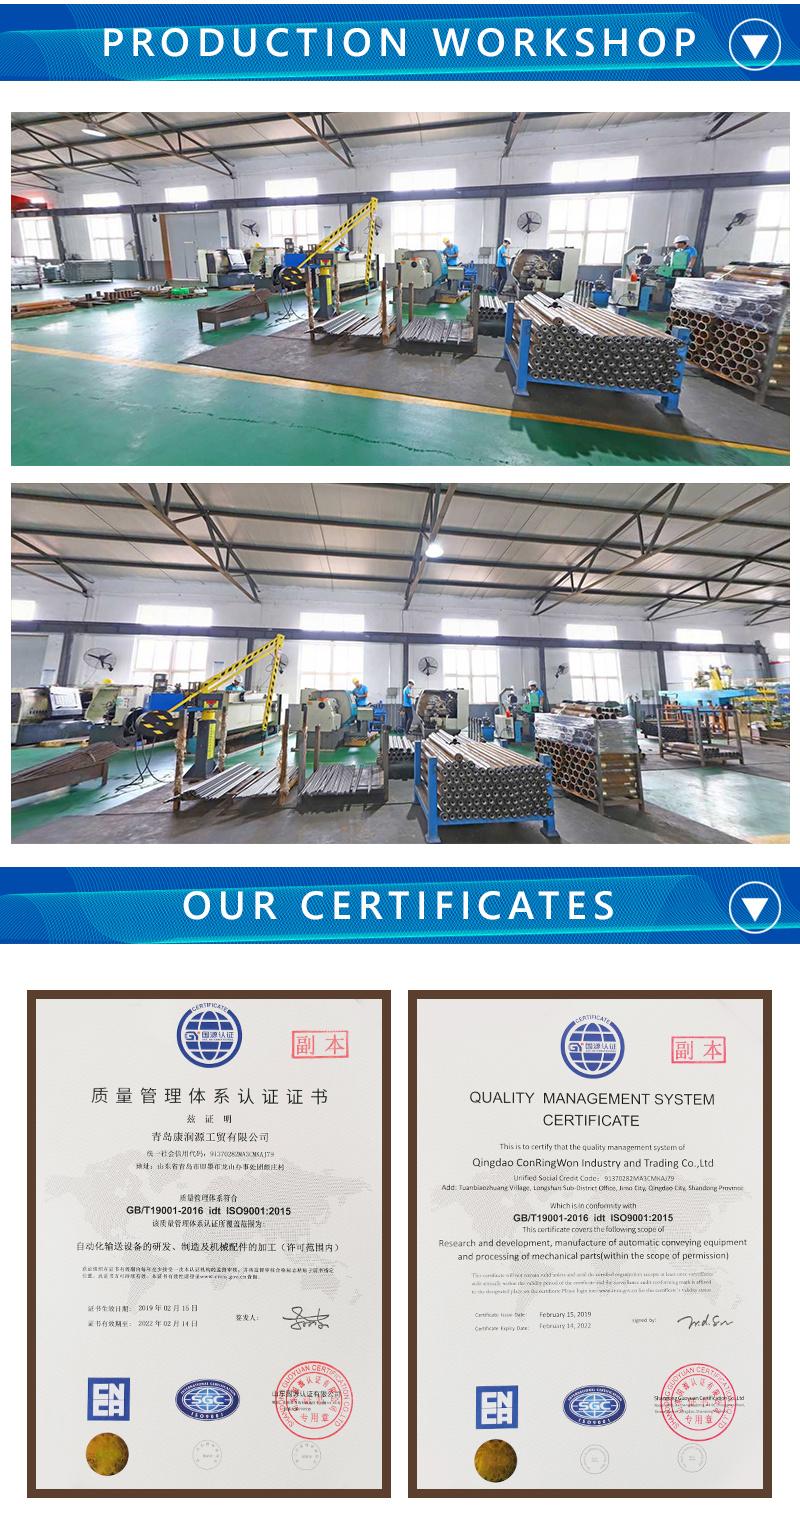 Best Quality 304 316 Stainless Steel Antimagnetic Conveyor Idler Rollers